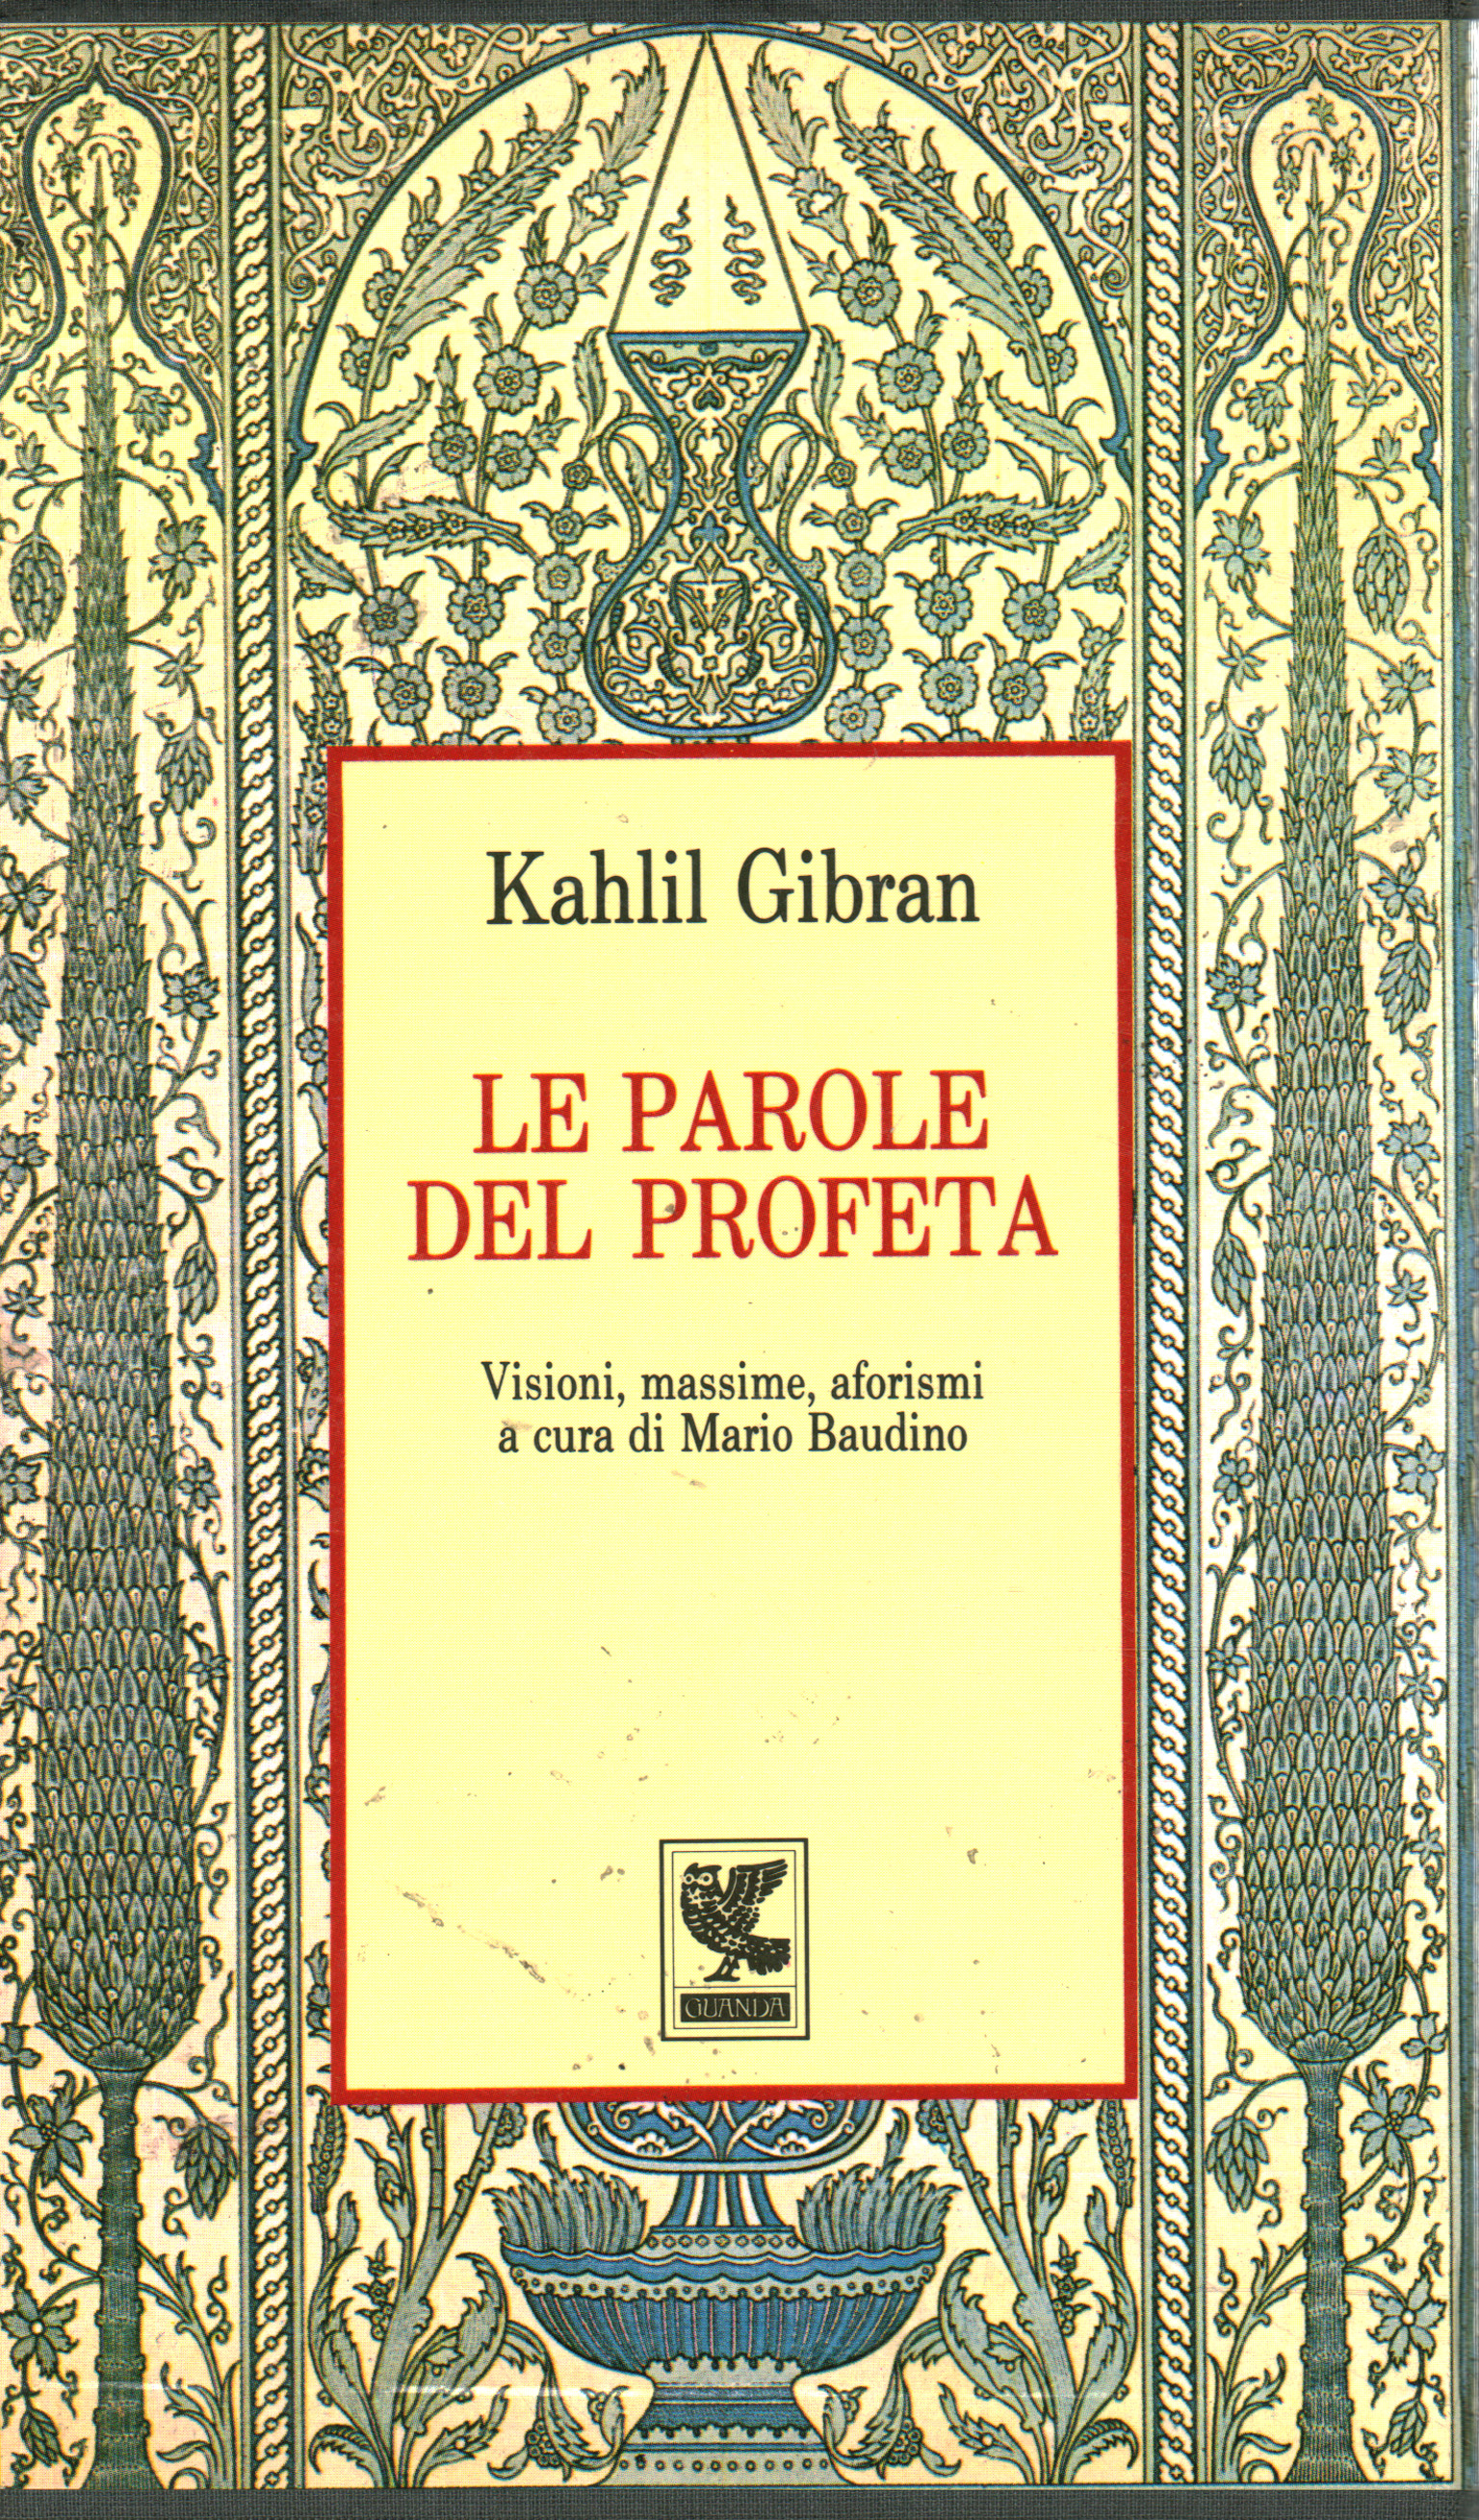 Le parole del profeta, Kahlil Gibran